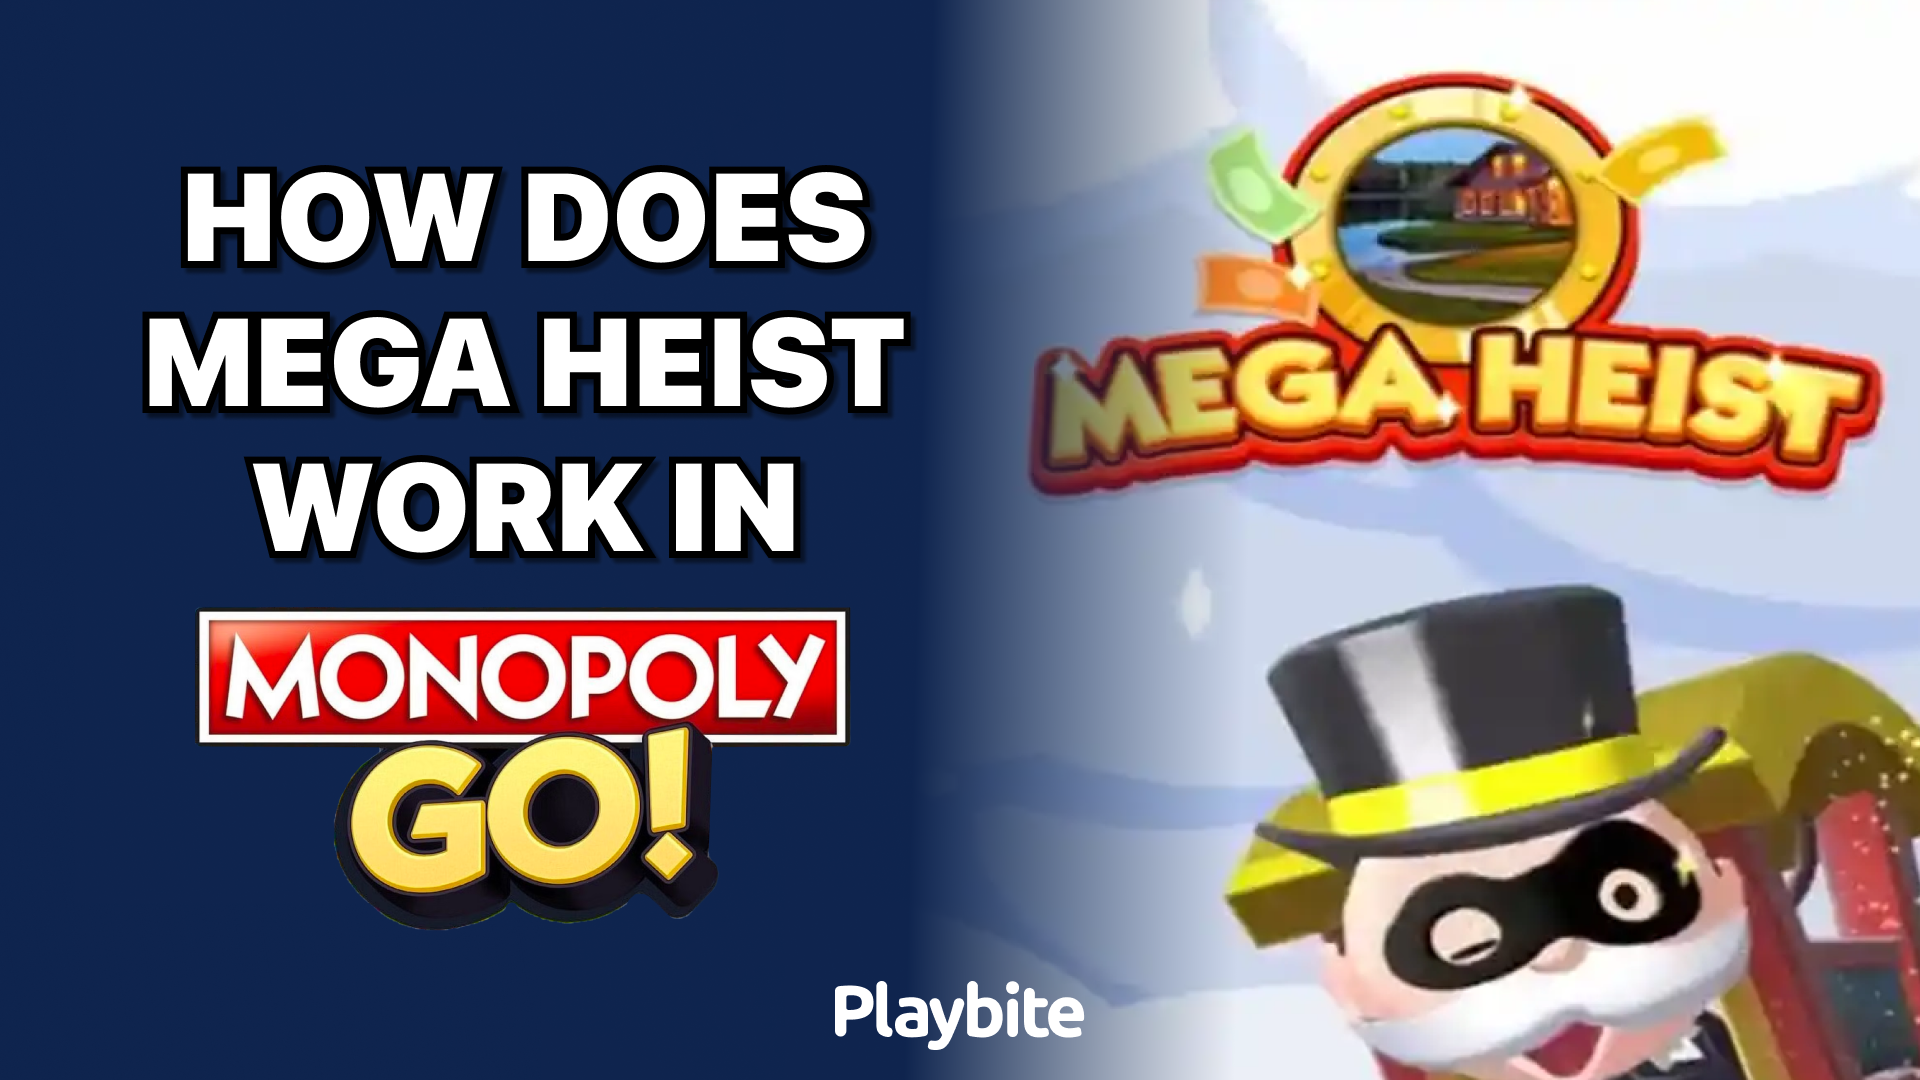 How Does Mega Heist Work in Monopoly Go?